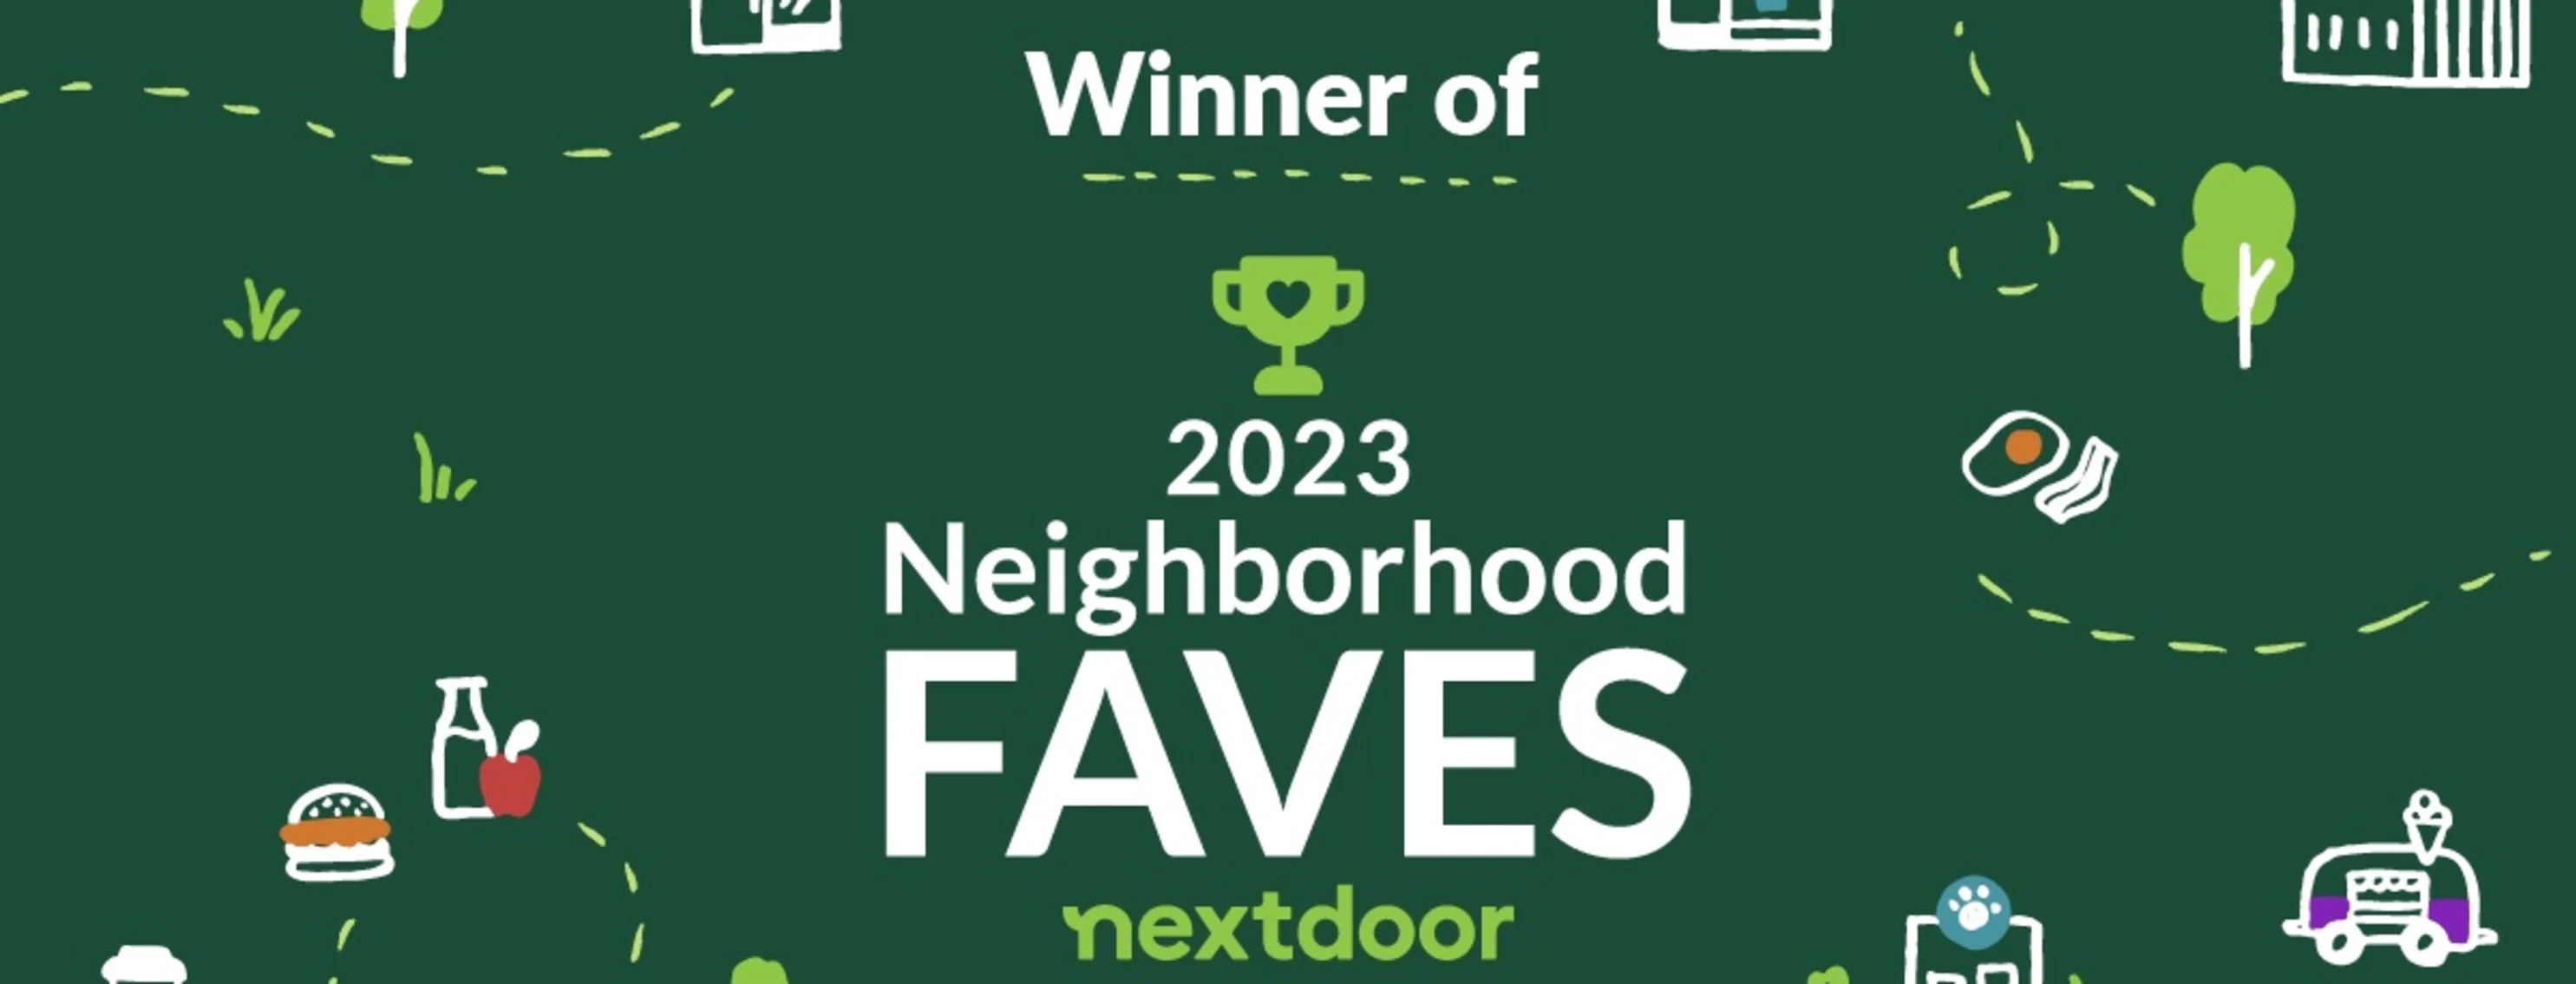 Winner 2023 Neighborhood Faves Nextdoor